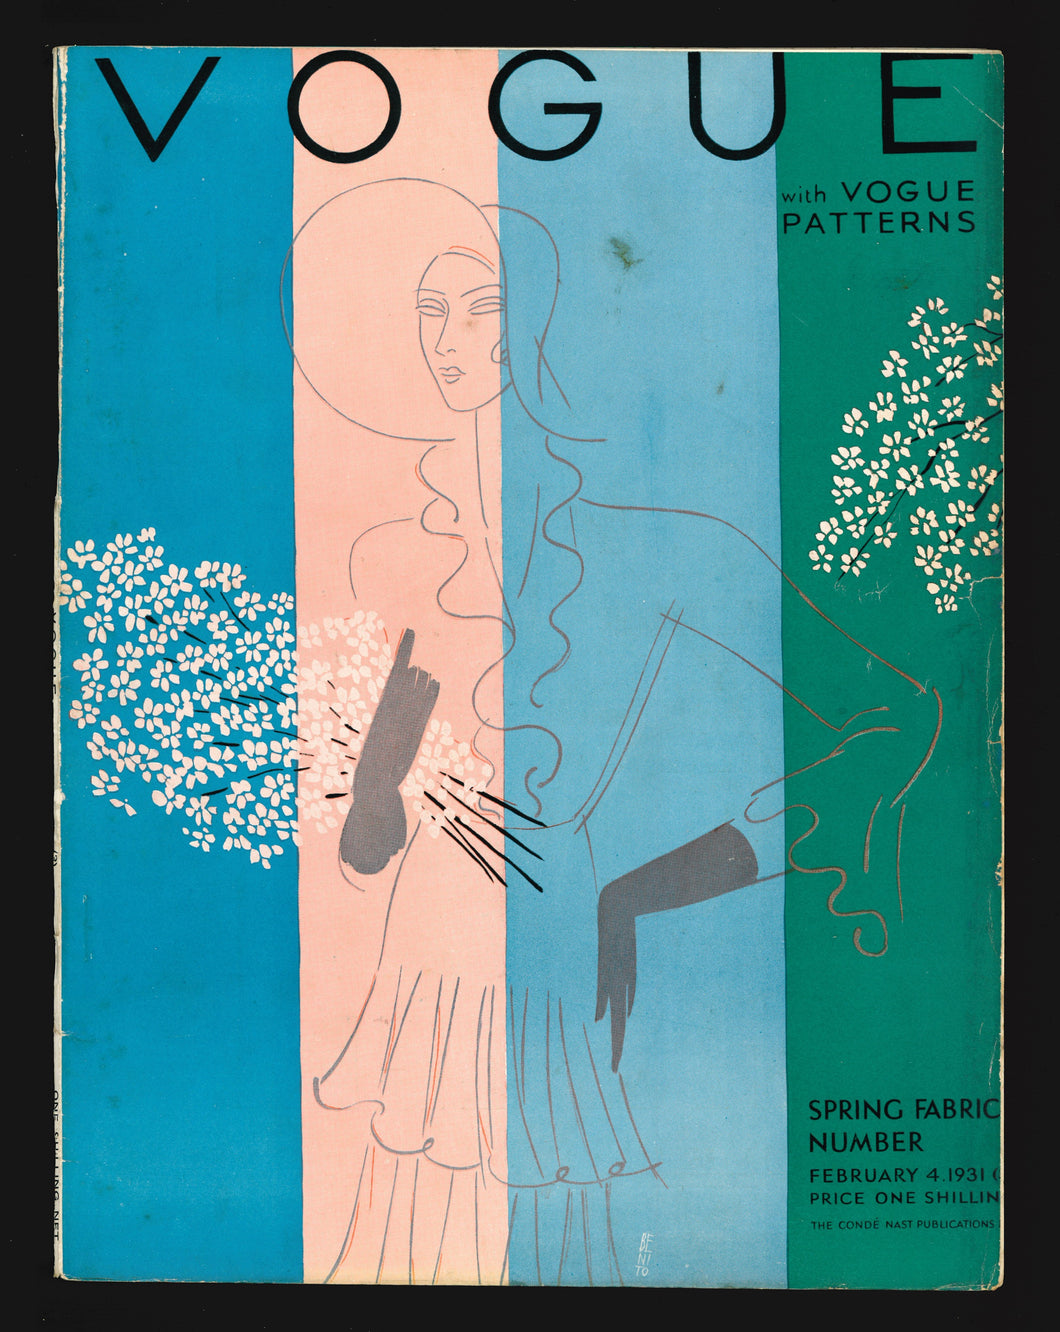 Vogue UK Feb 4 1931